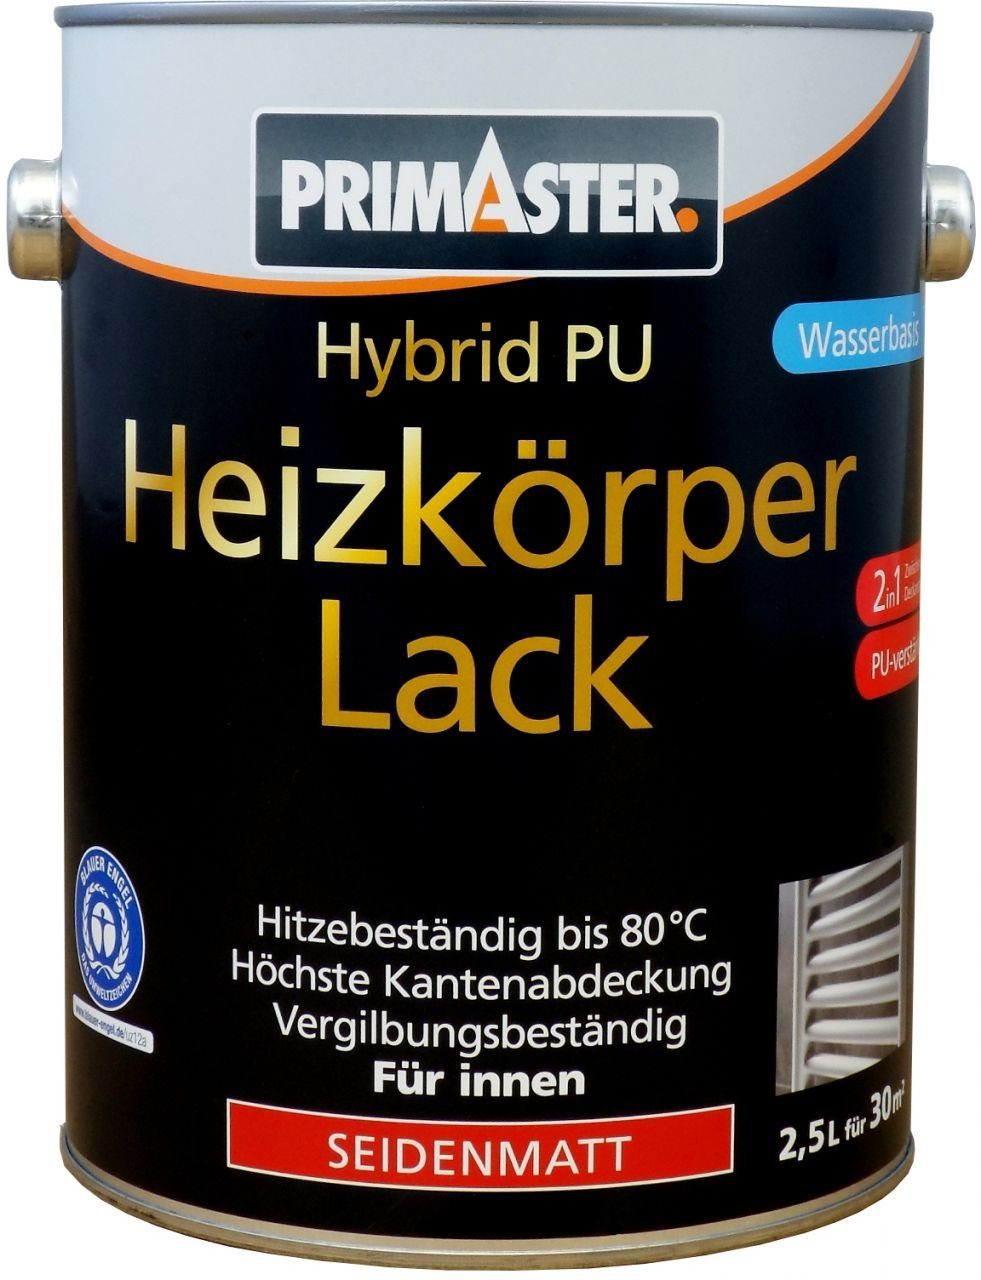 Hybrid-PU Primaster Heizkörperlack L Primaster Heizkörperlack 2,5 weiß